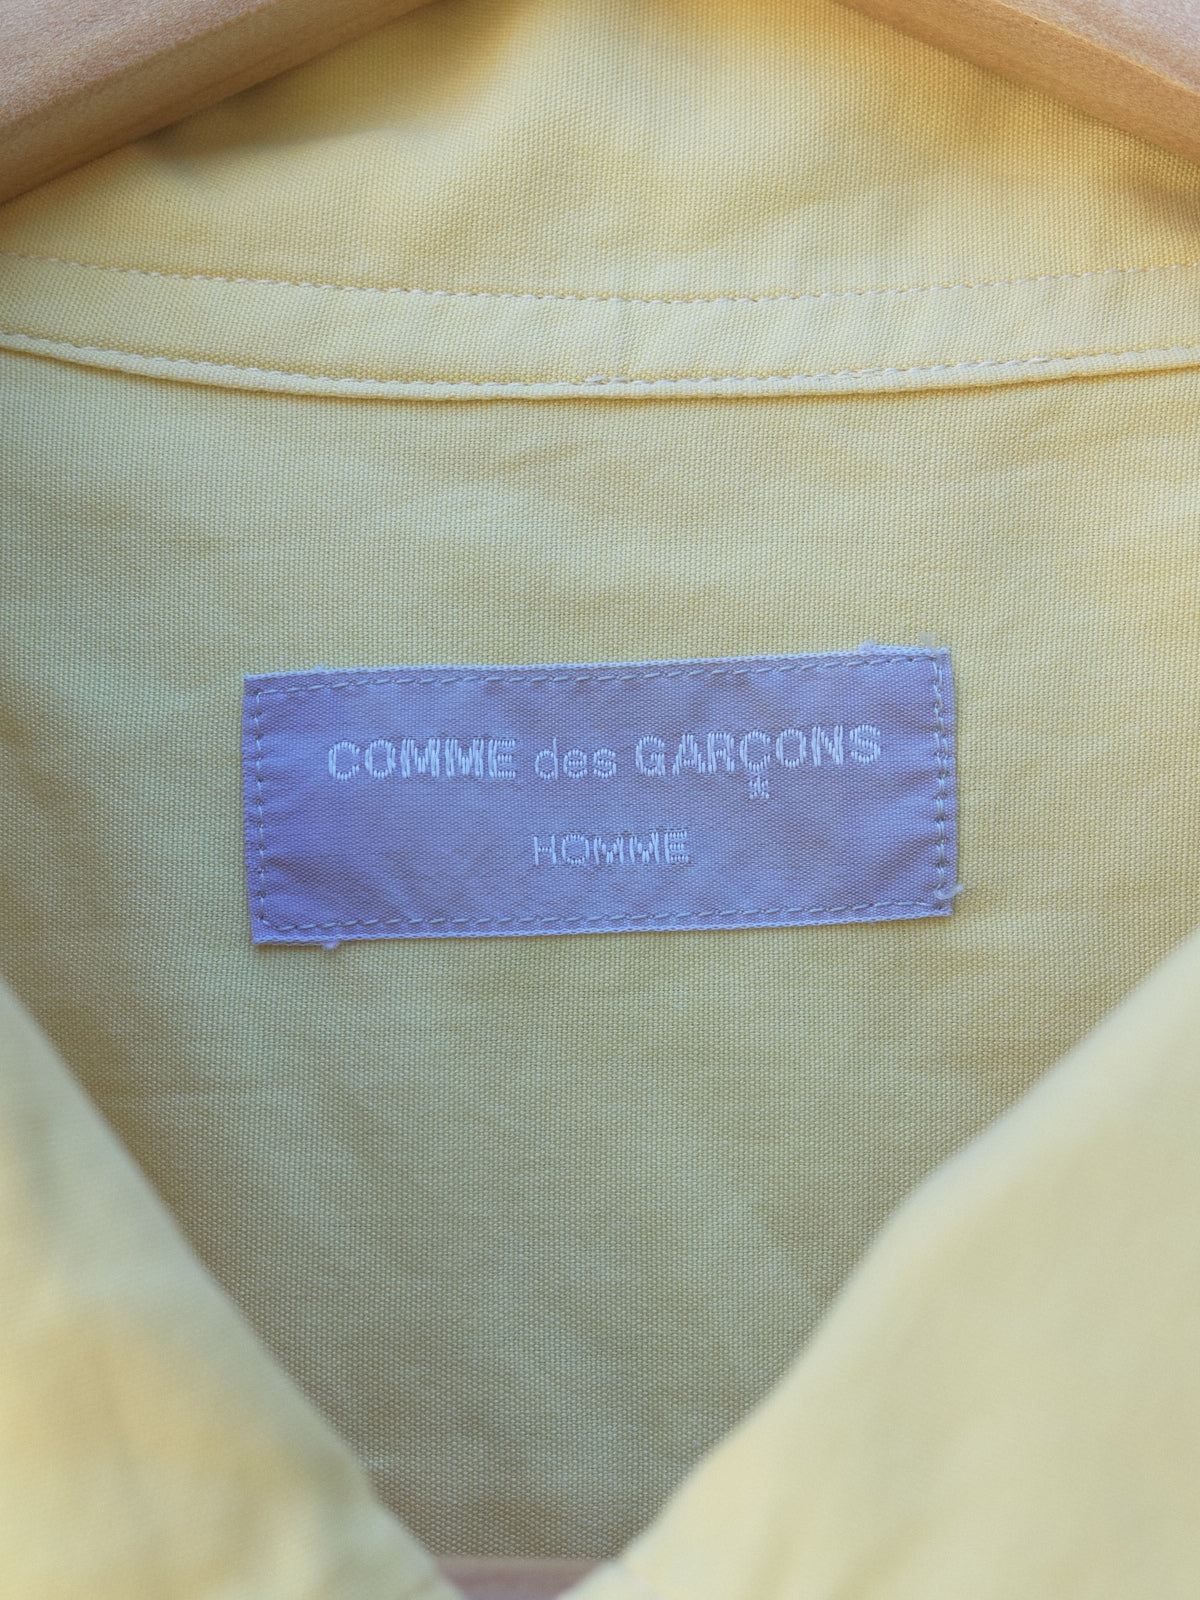 Comme Des Garcons Homme 1990s yellow oversized short sleeve shirt - M L XL